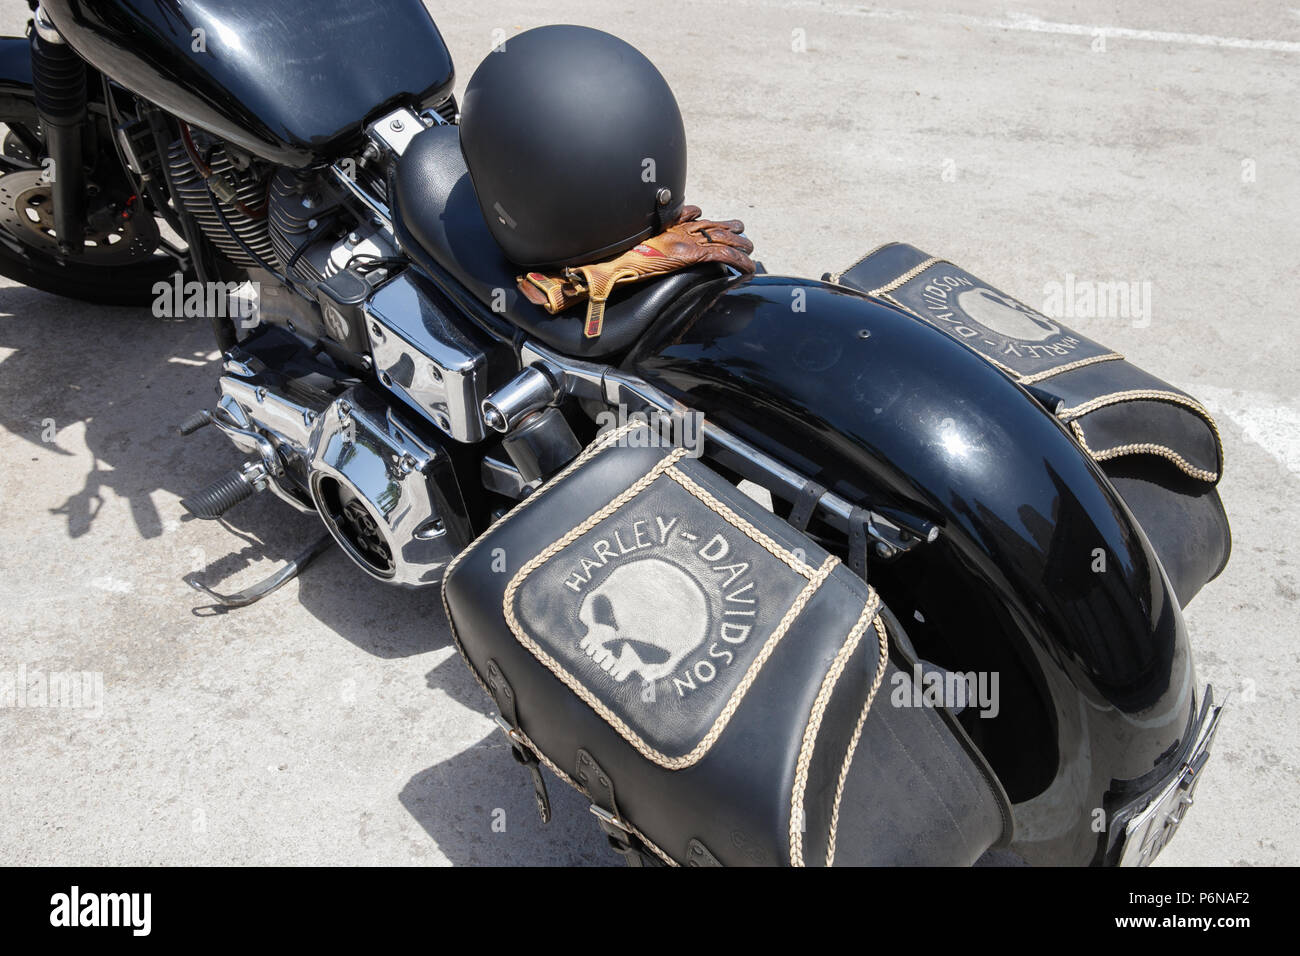 Casque sur moto Harley Davidson Photo Stock - Alamy